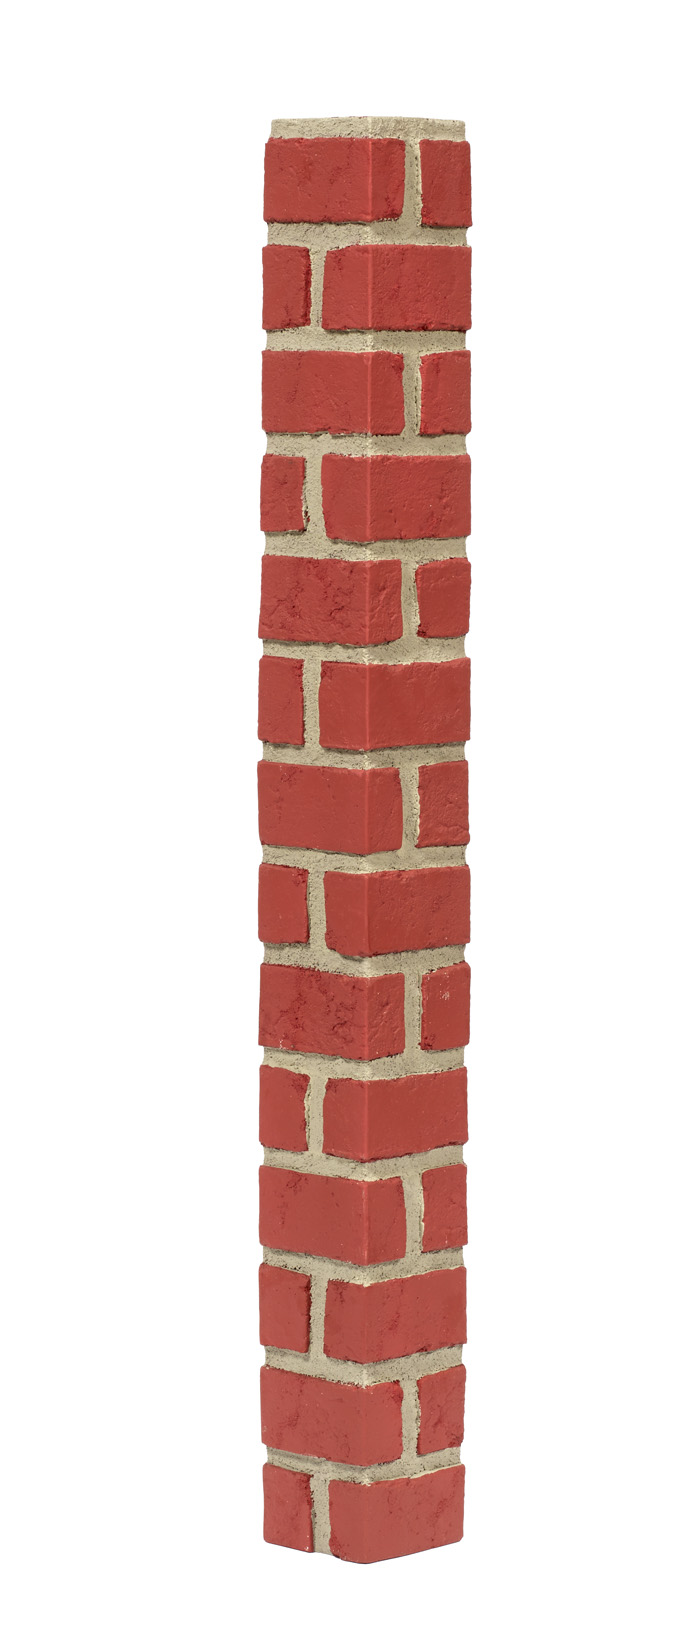 Brick Antique Corner - Red Gray Grout